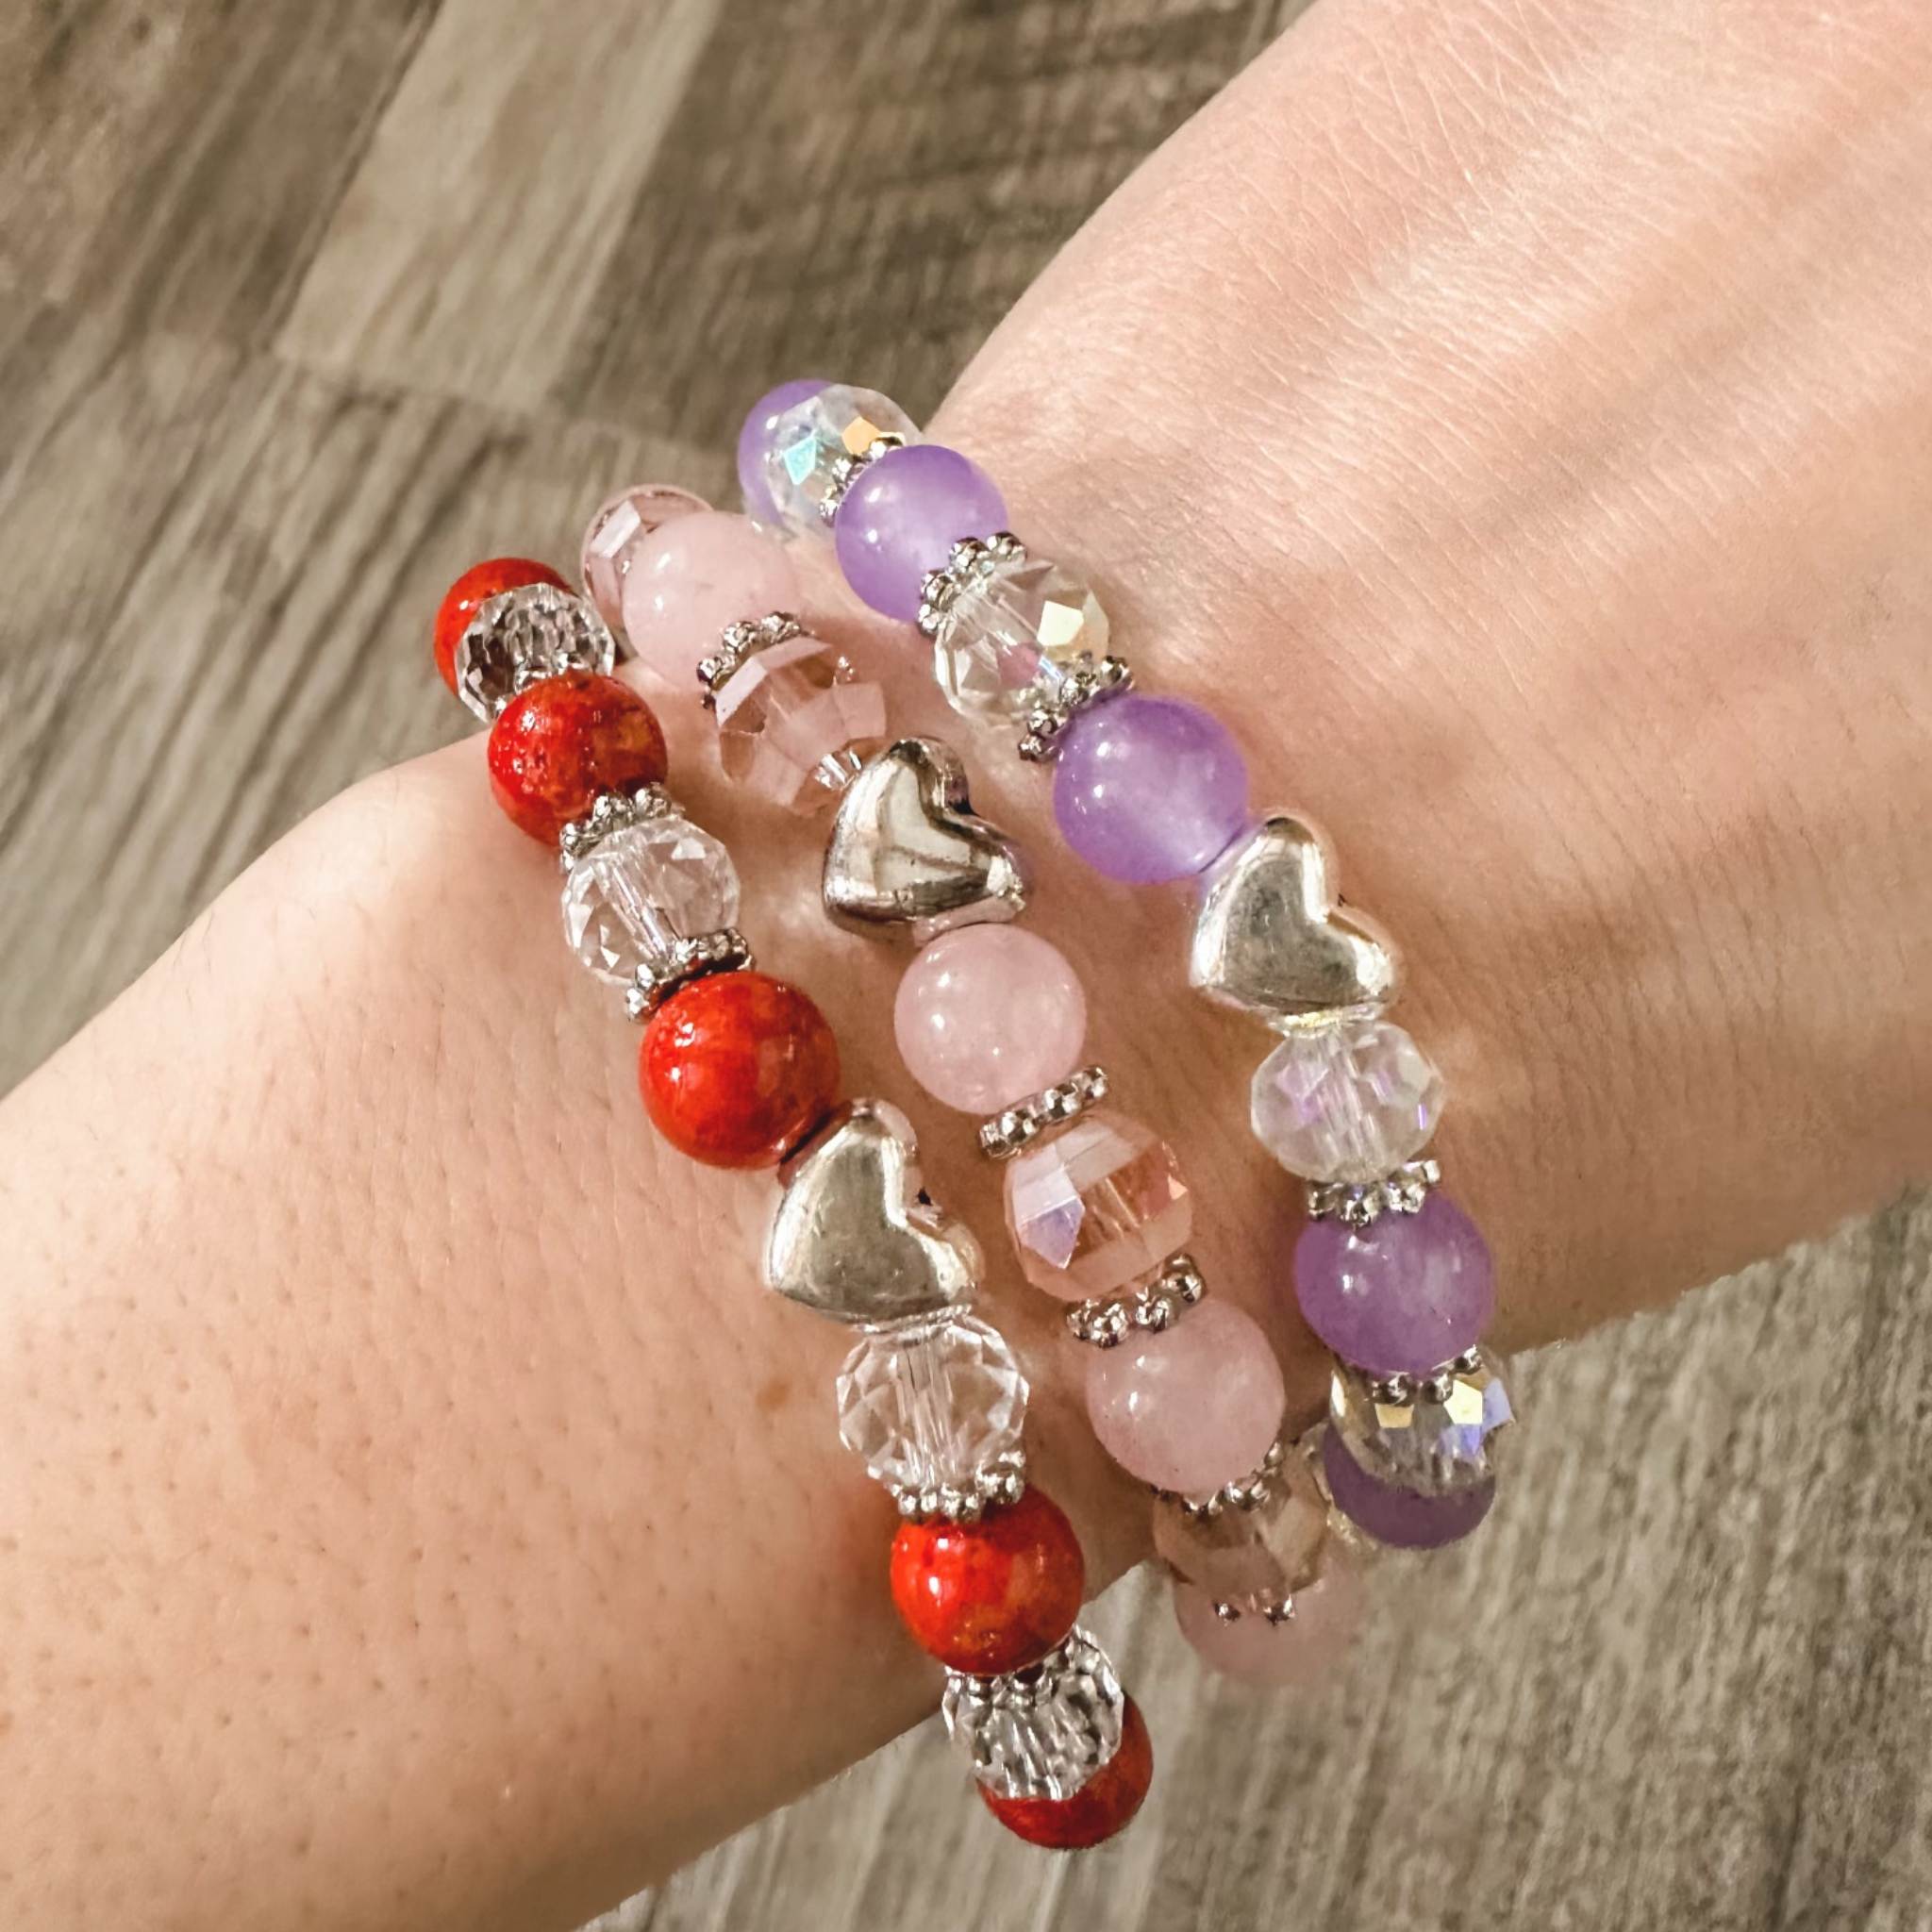 Pink Bracelet Heart Bracelets Gifts for Her Handmade 